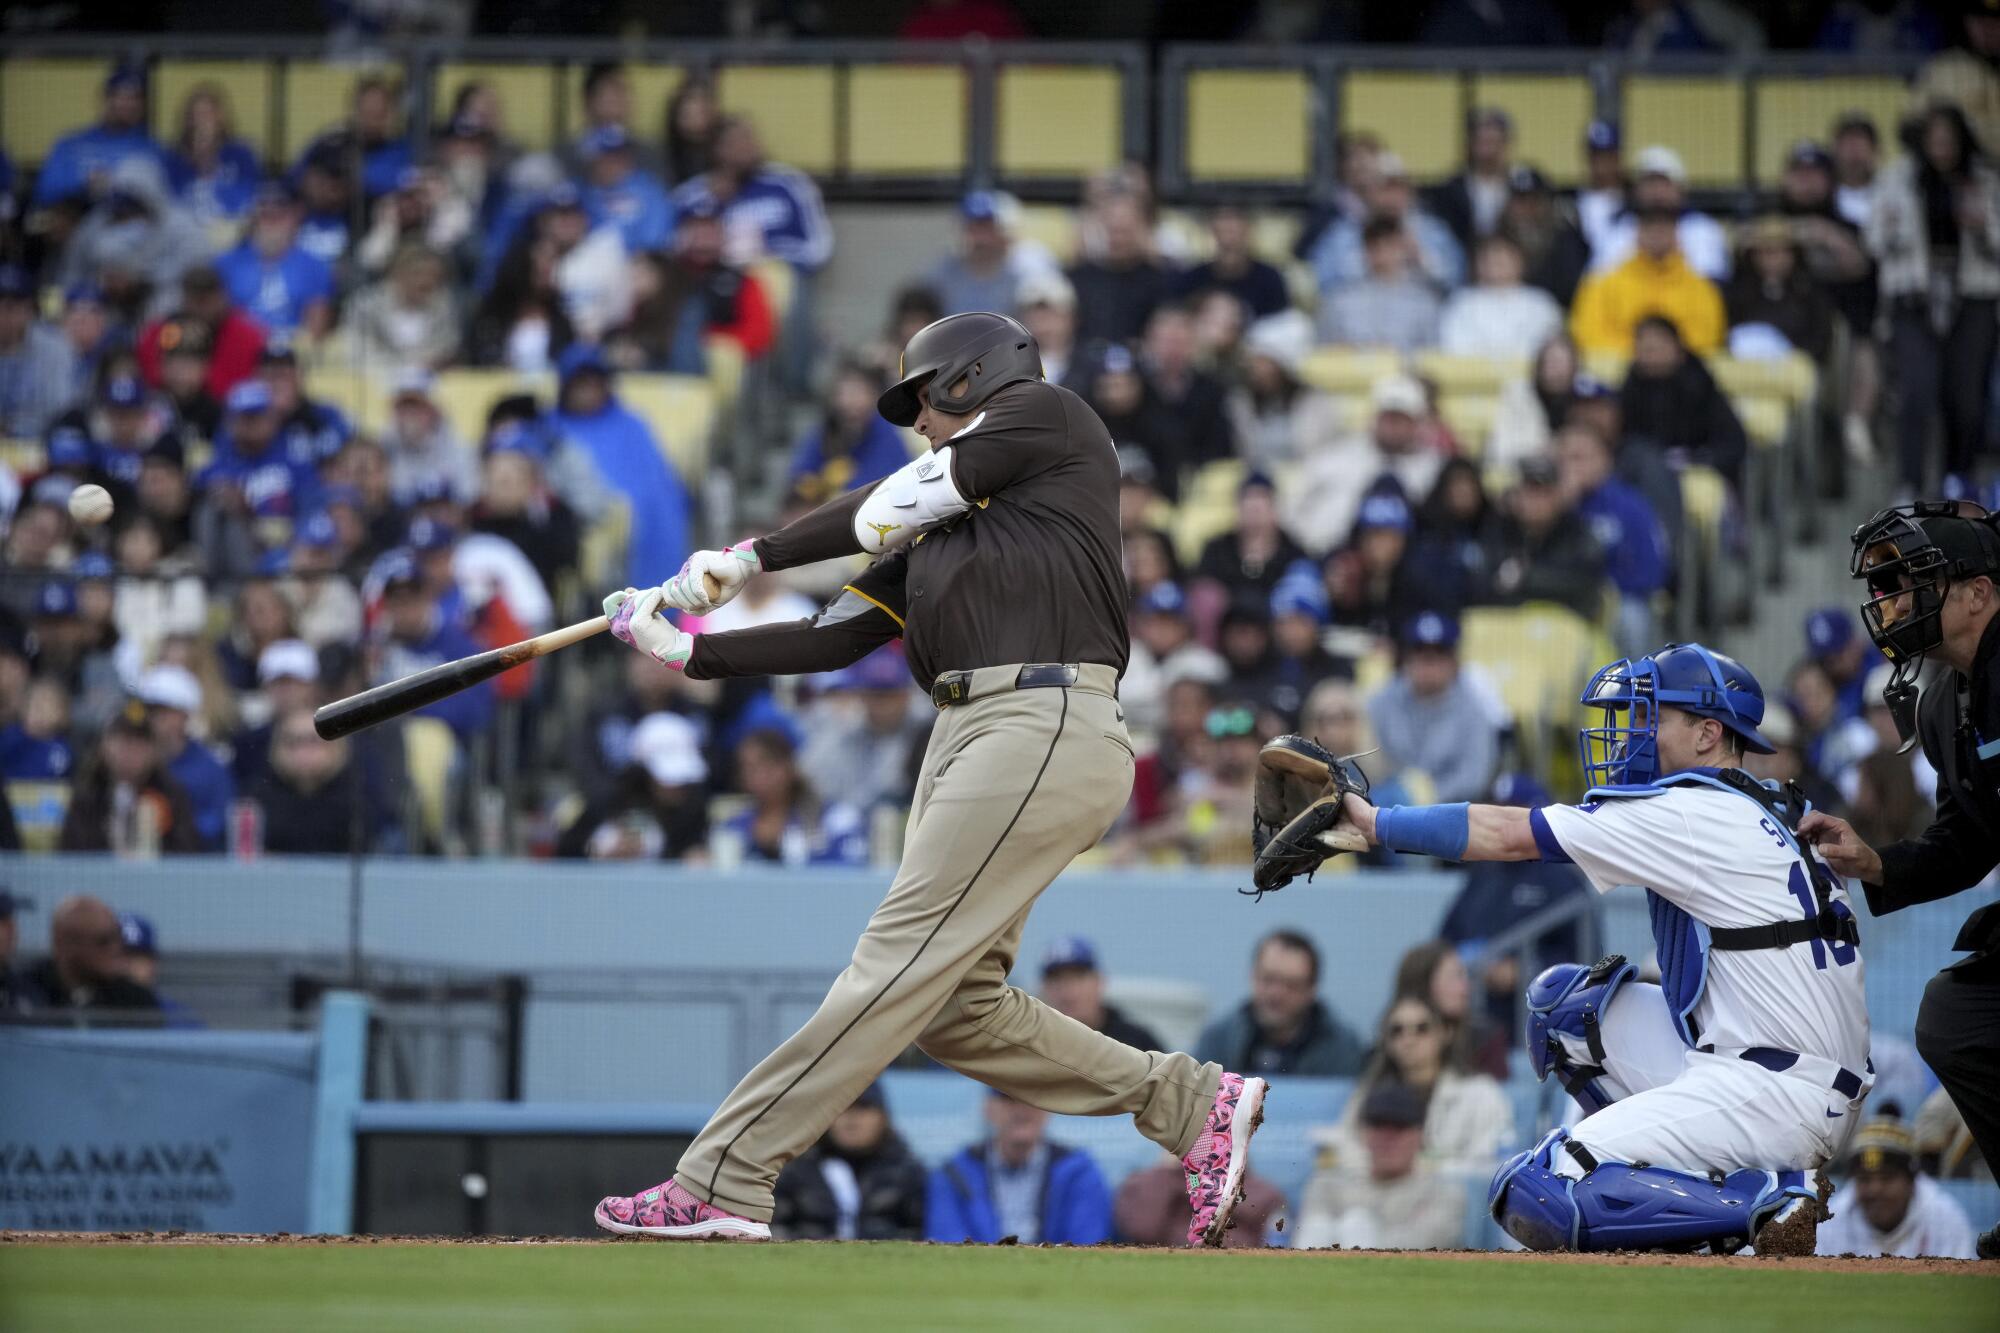 Manny Machado hits a home run during a baseball game against the Dodgers